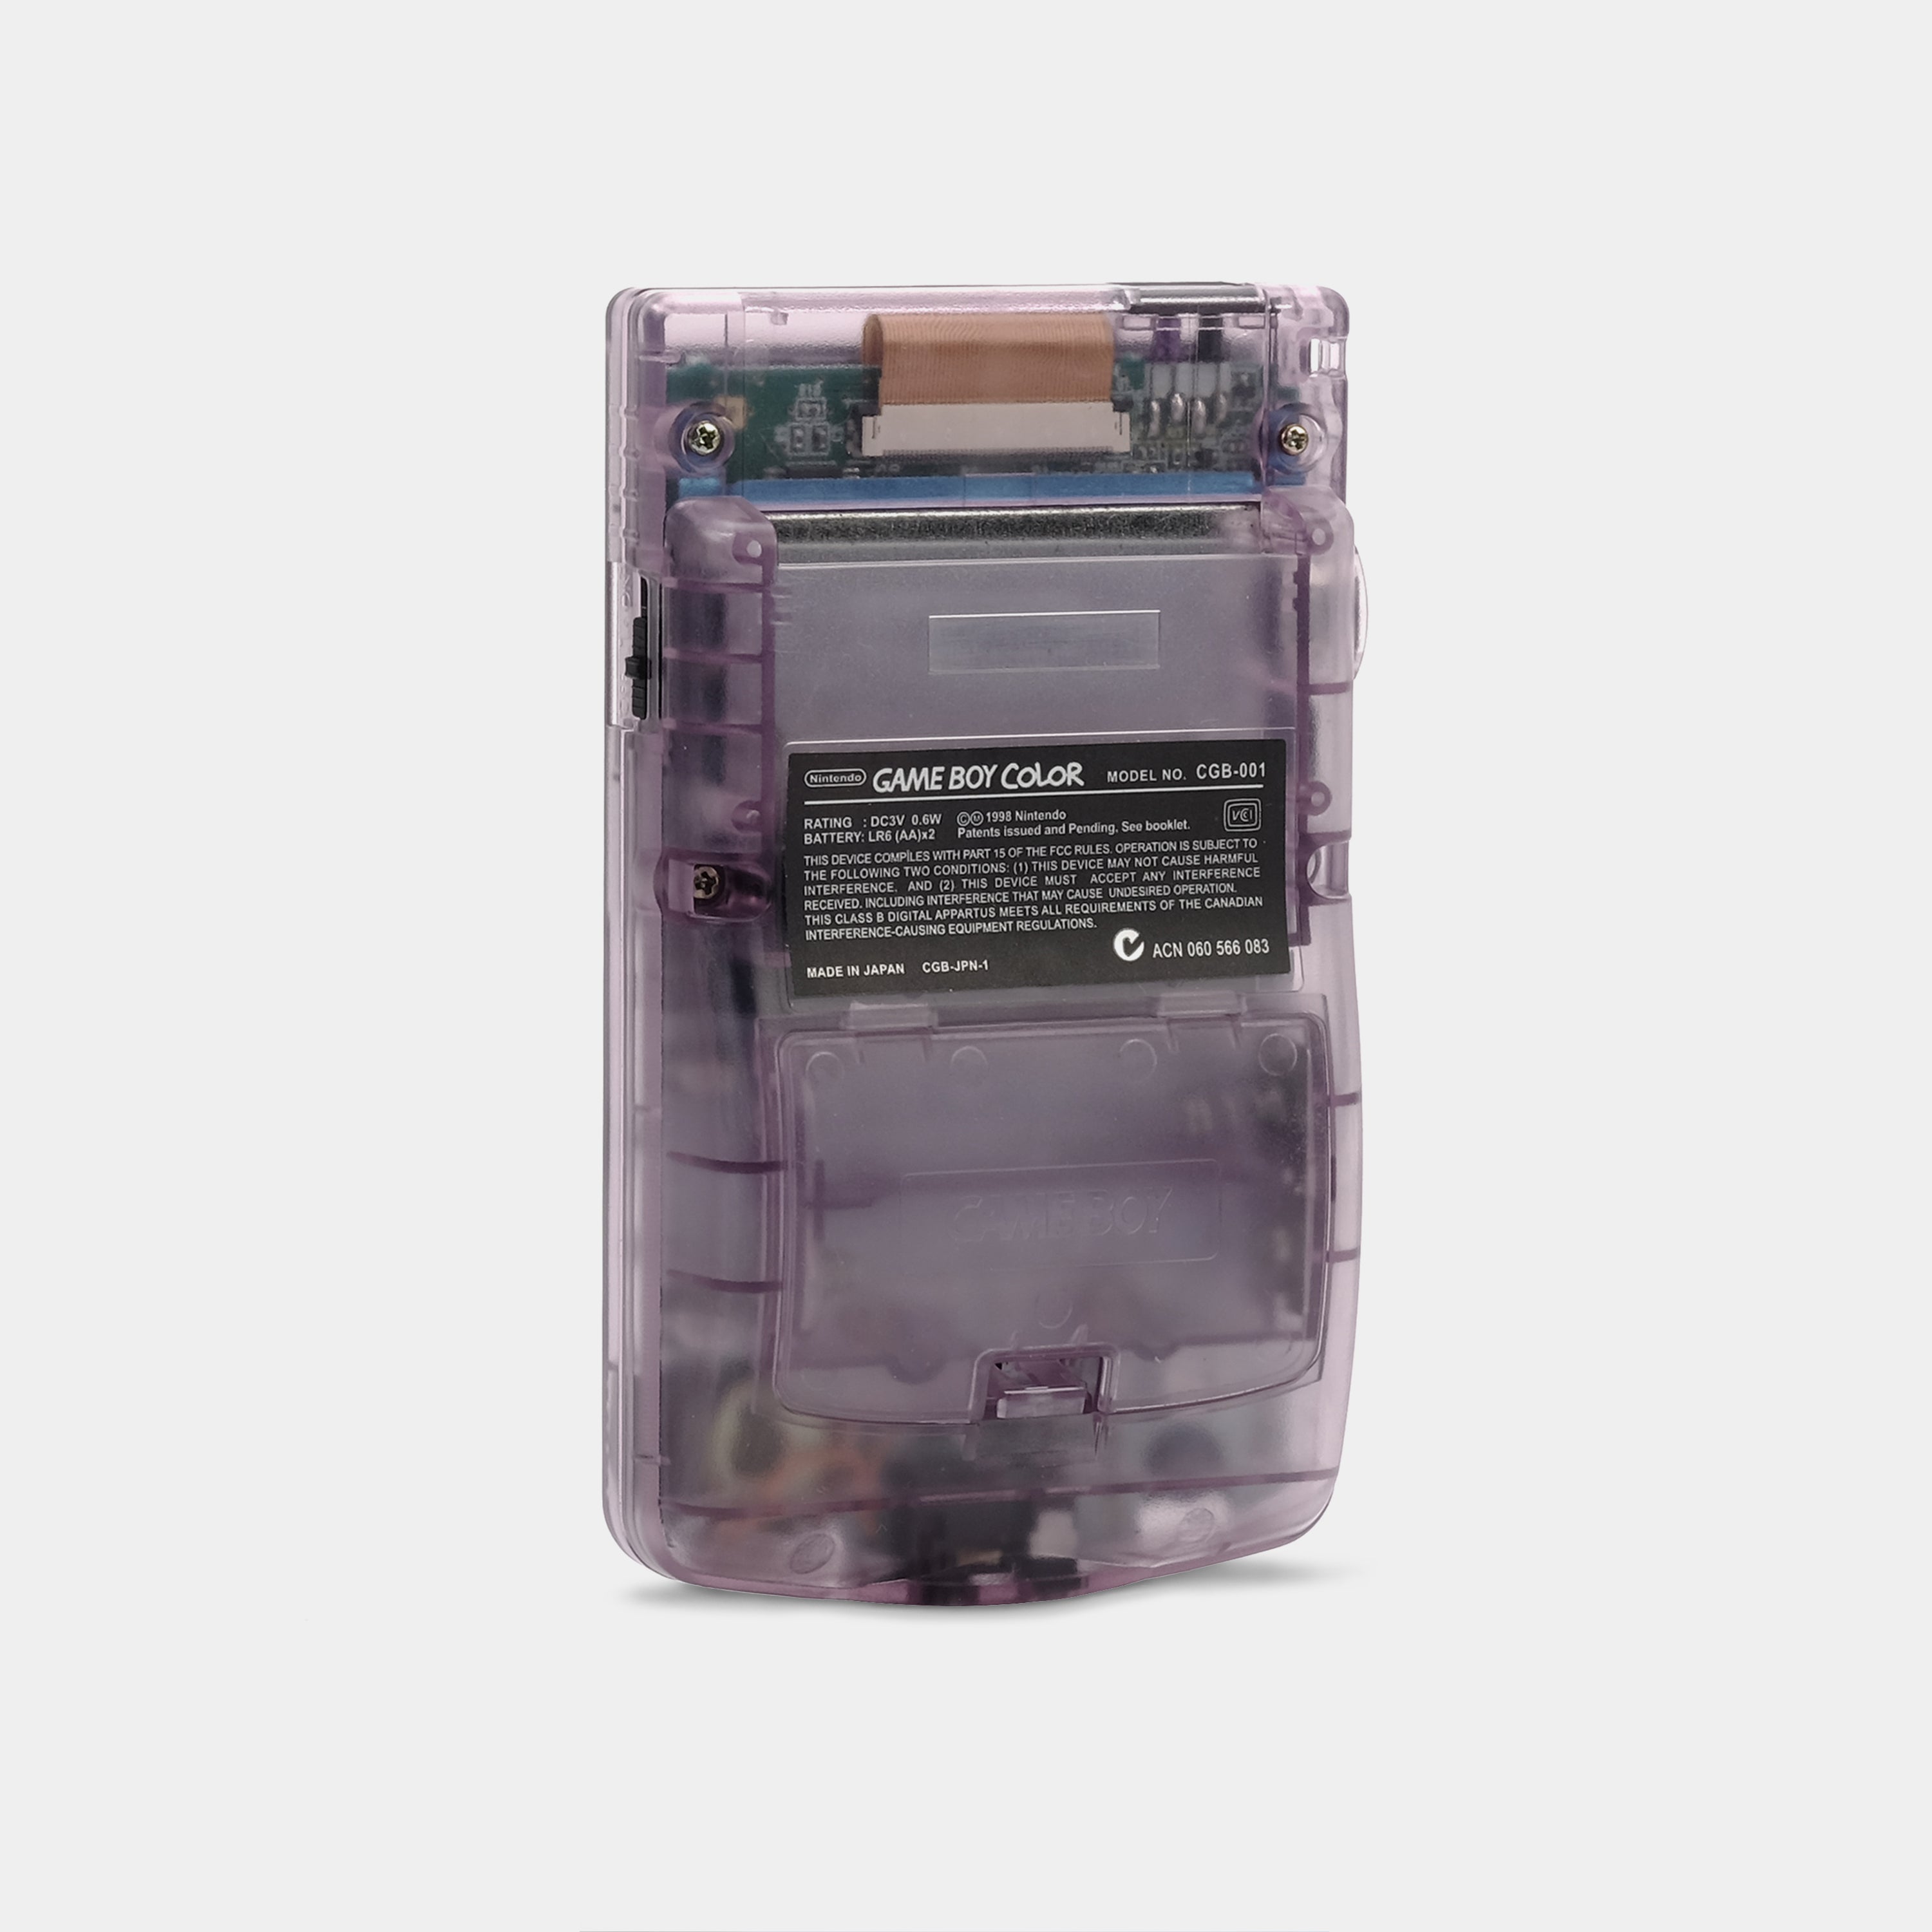 Nintendo Game Boy Color Atomic Purple Game Console